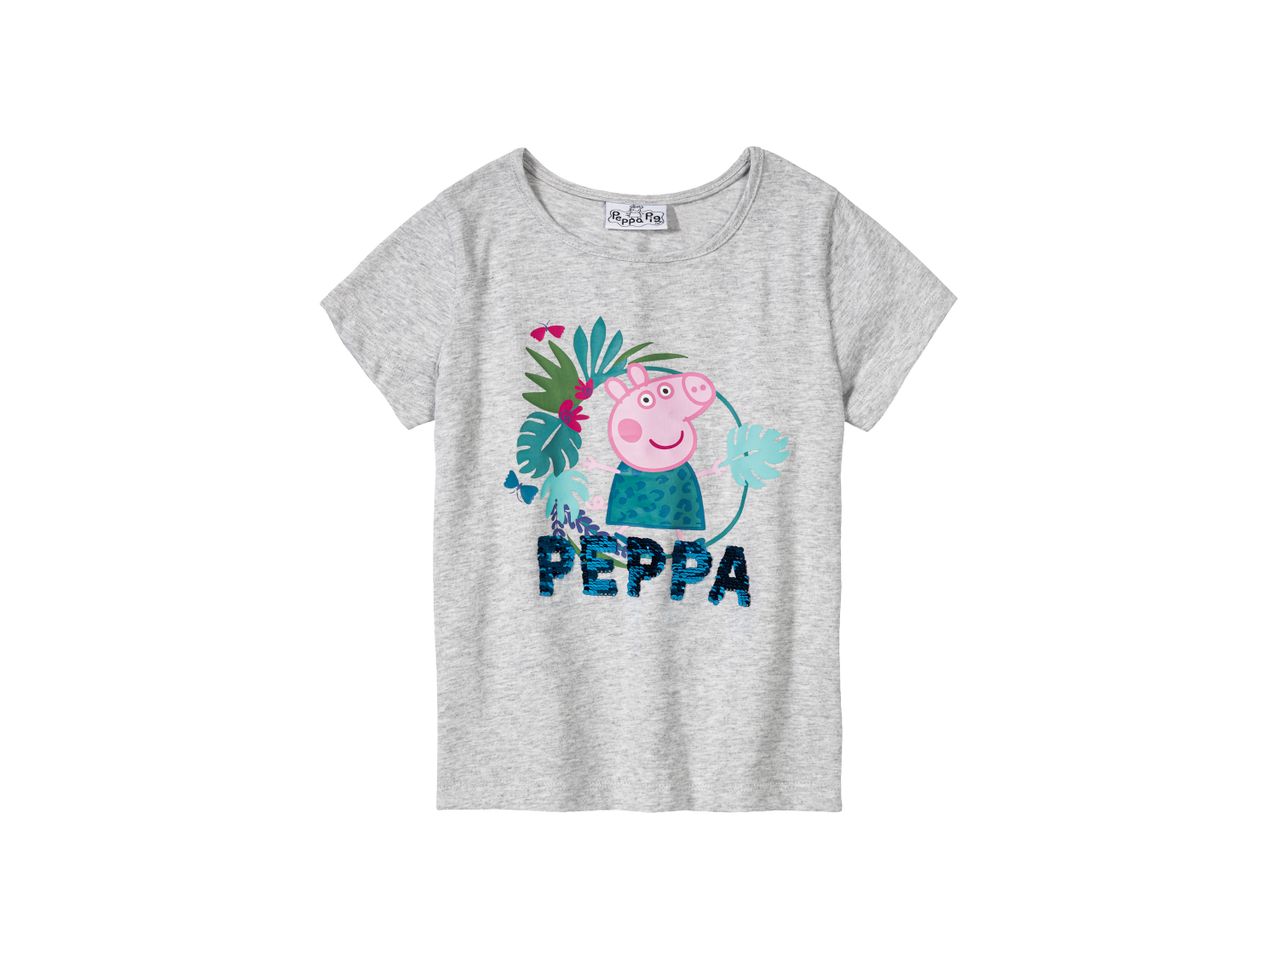 T-shirt da bambina Paw Patrol, Peppa , prezzo 4.99 EUR 
T-shirt da bambina 